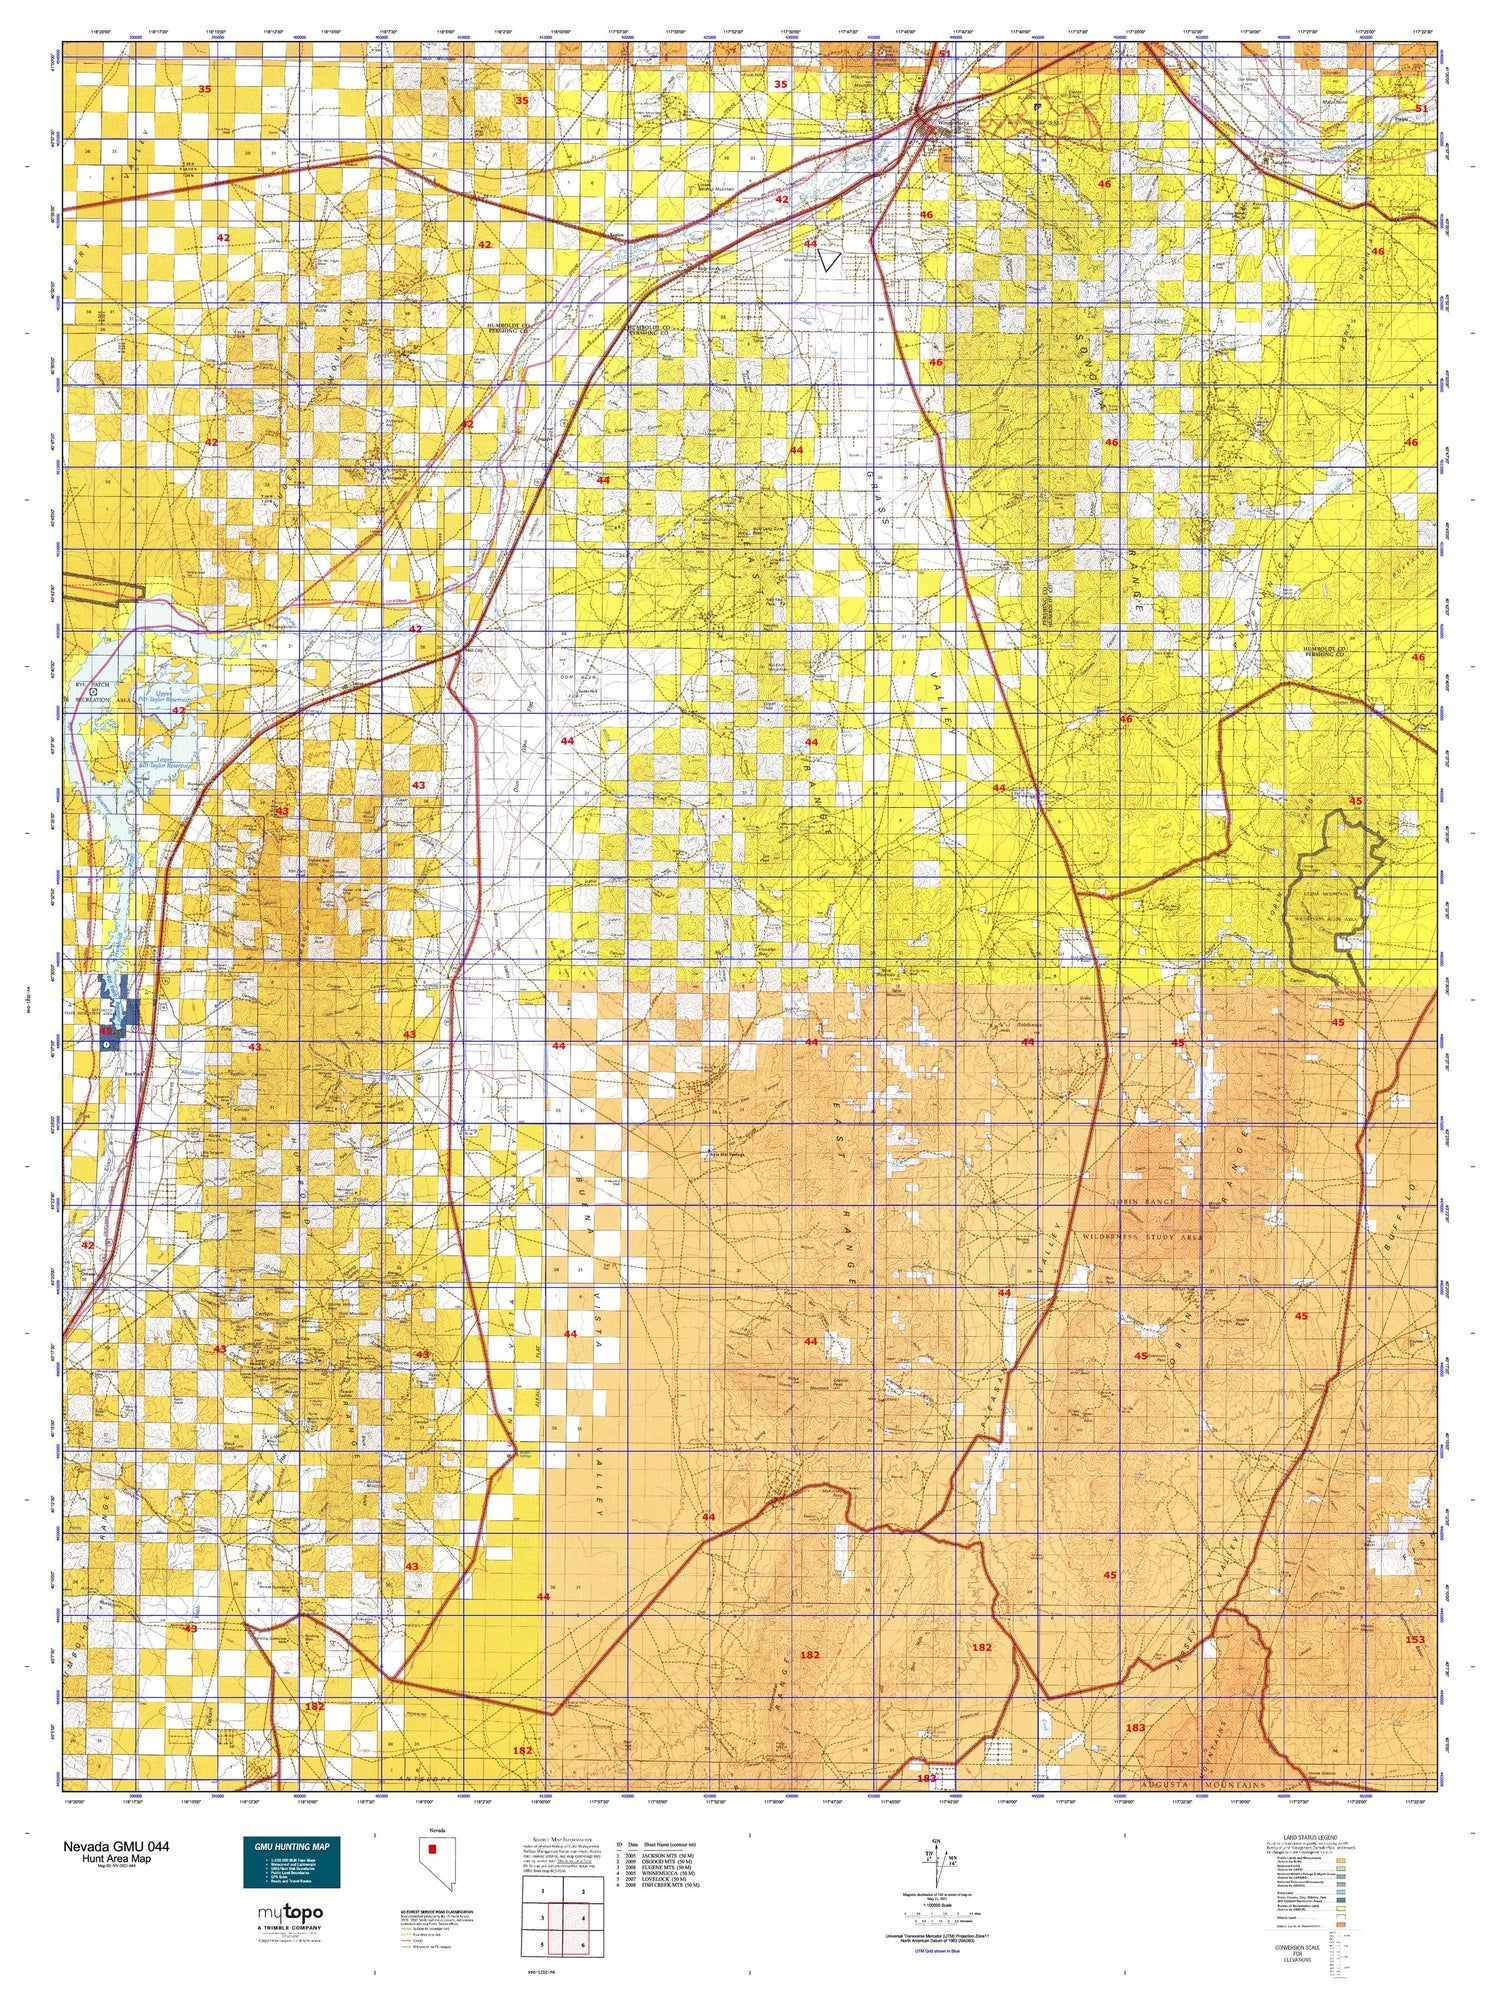 Nevada GMU 044 Map Image